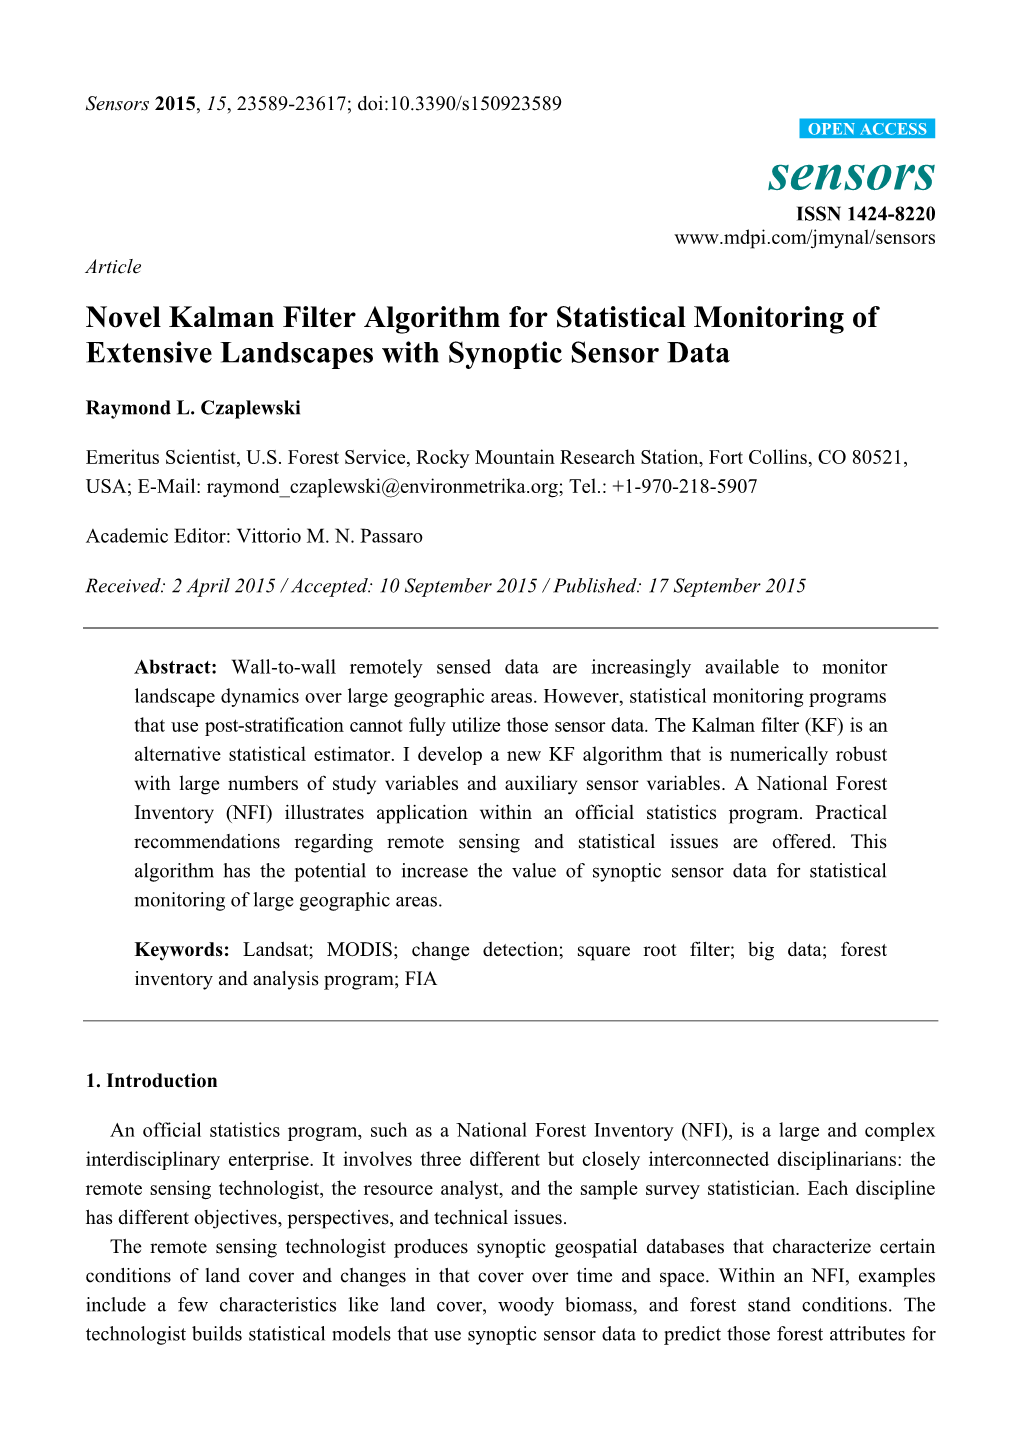 Novel Kalman Filter Algorithm for Statistical Monitoring of Extensive Landscapes with Synoptic Sensor Data